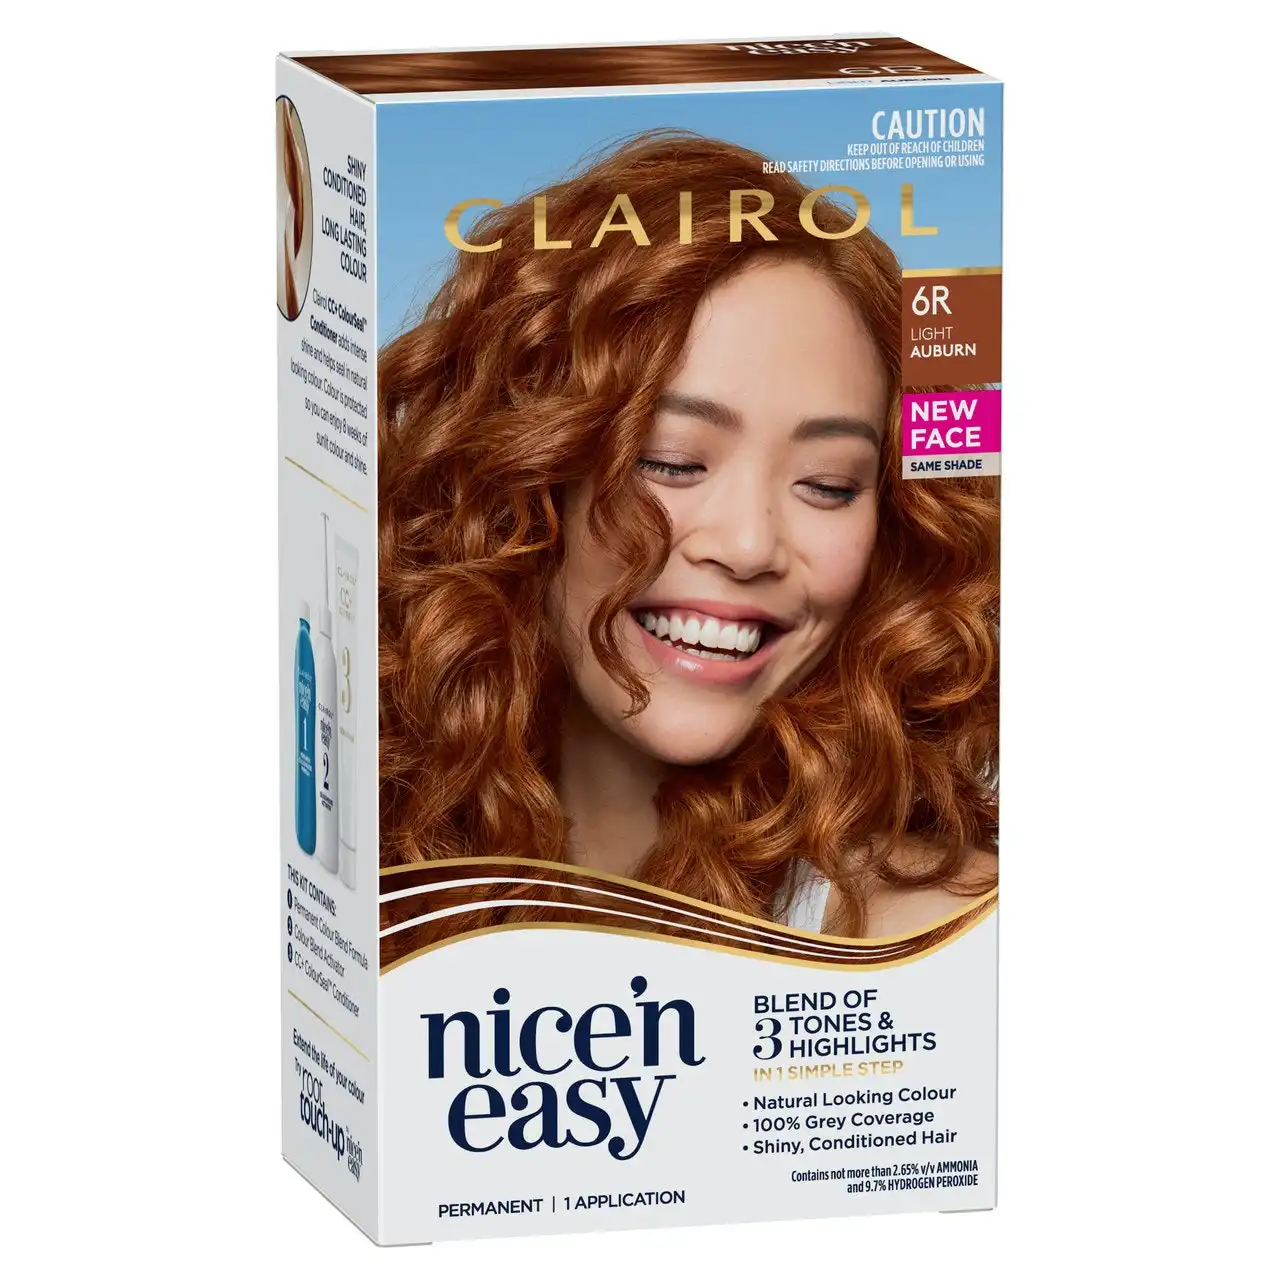 Clairol Nice 'N Easy 6R Natural Light Auburn Permanent Hair Colour